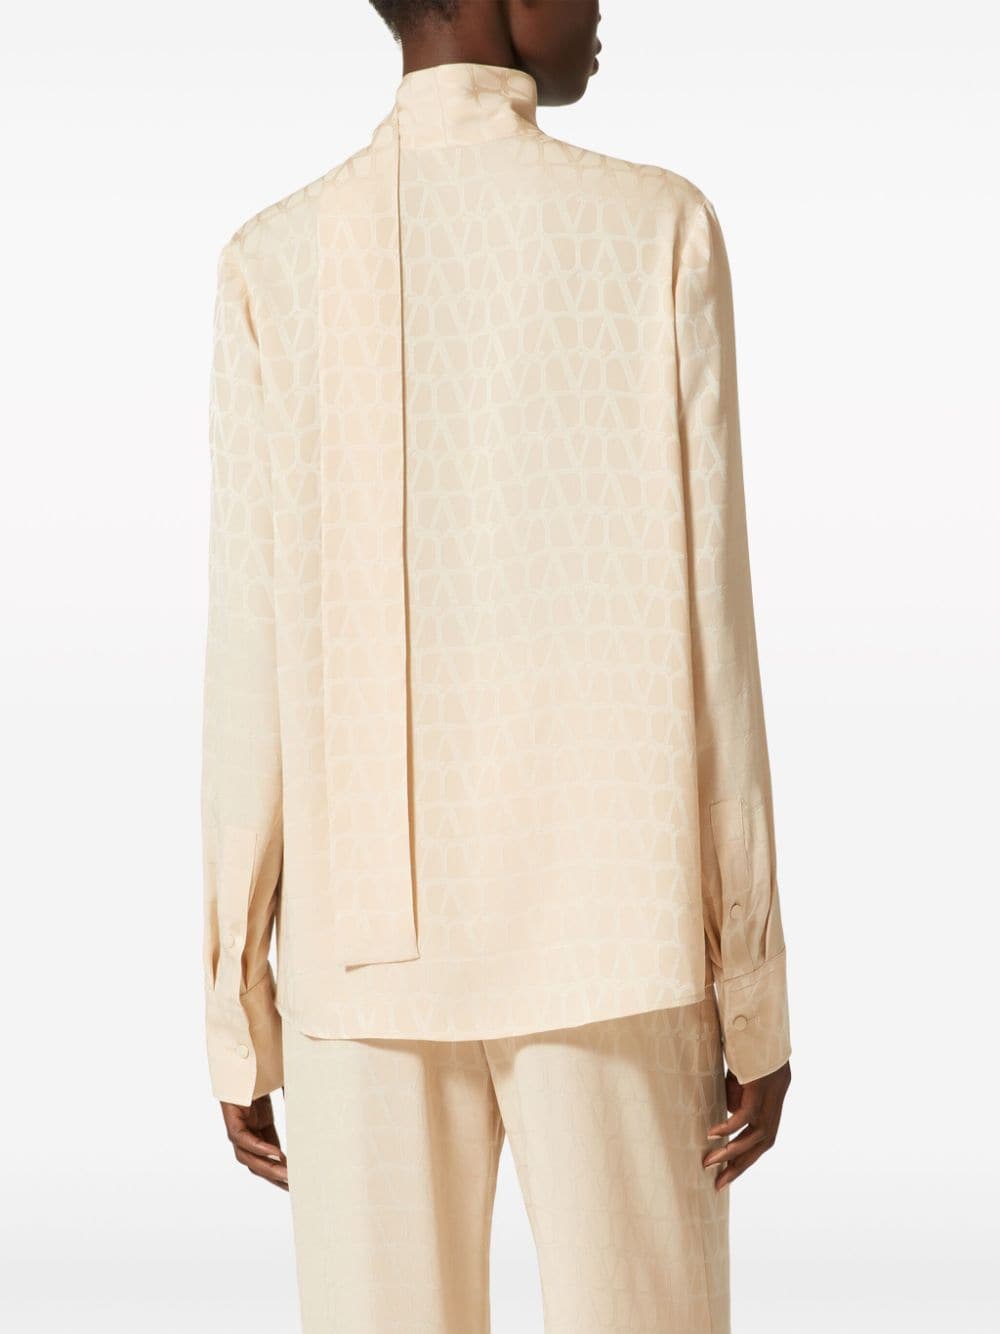 Toile Iconographe silk jacquard blouse<BR/><BR/><BR/>